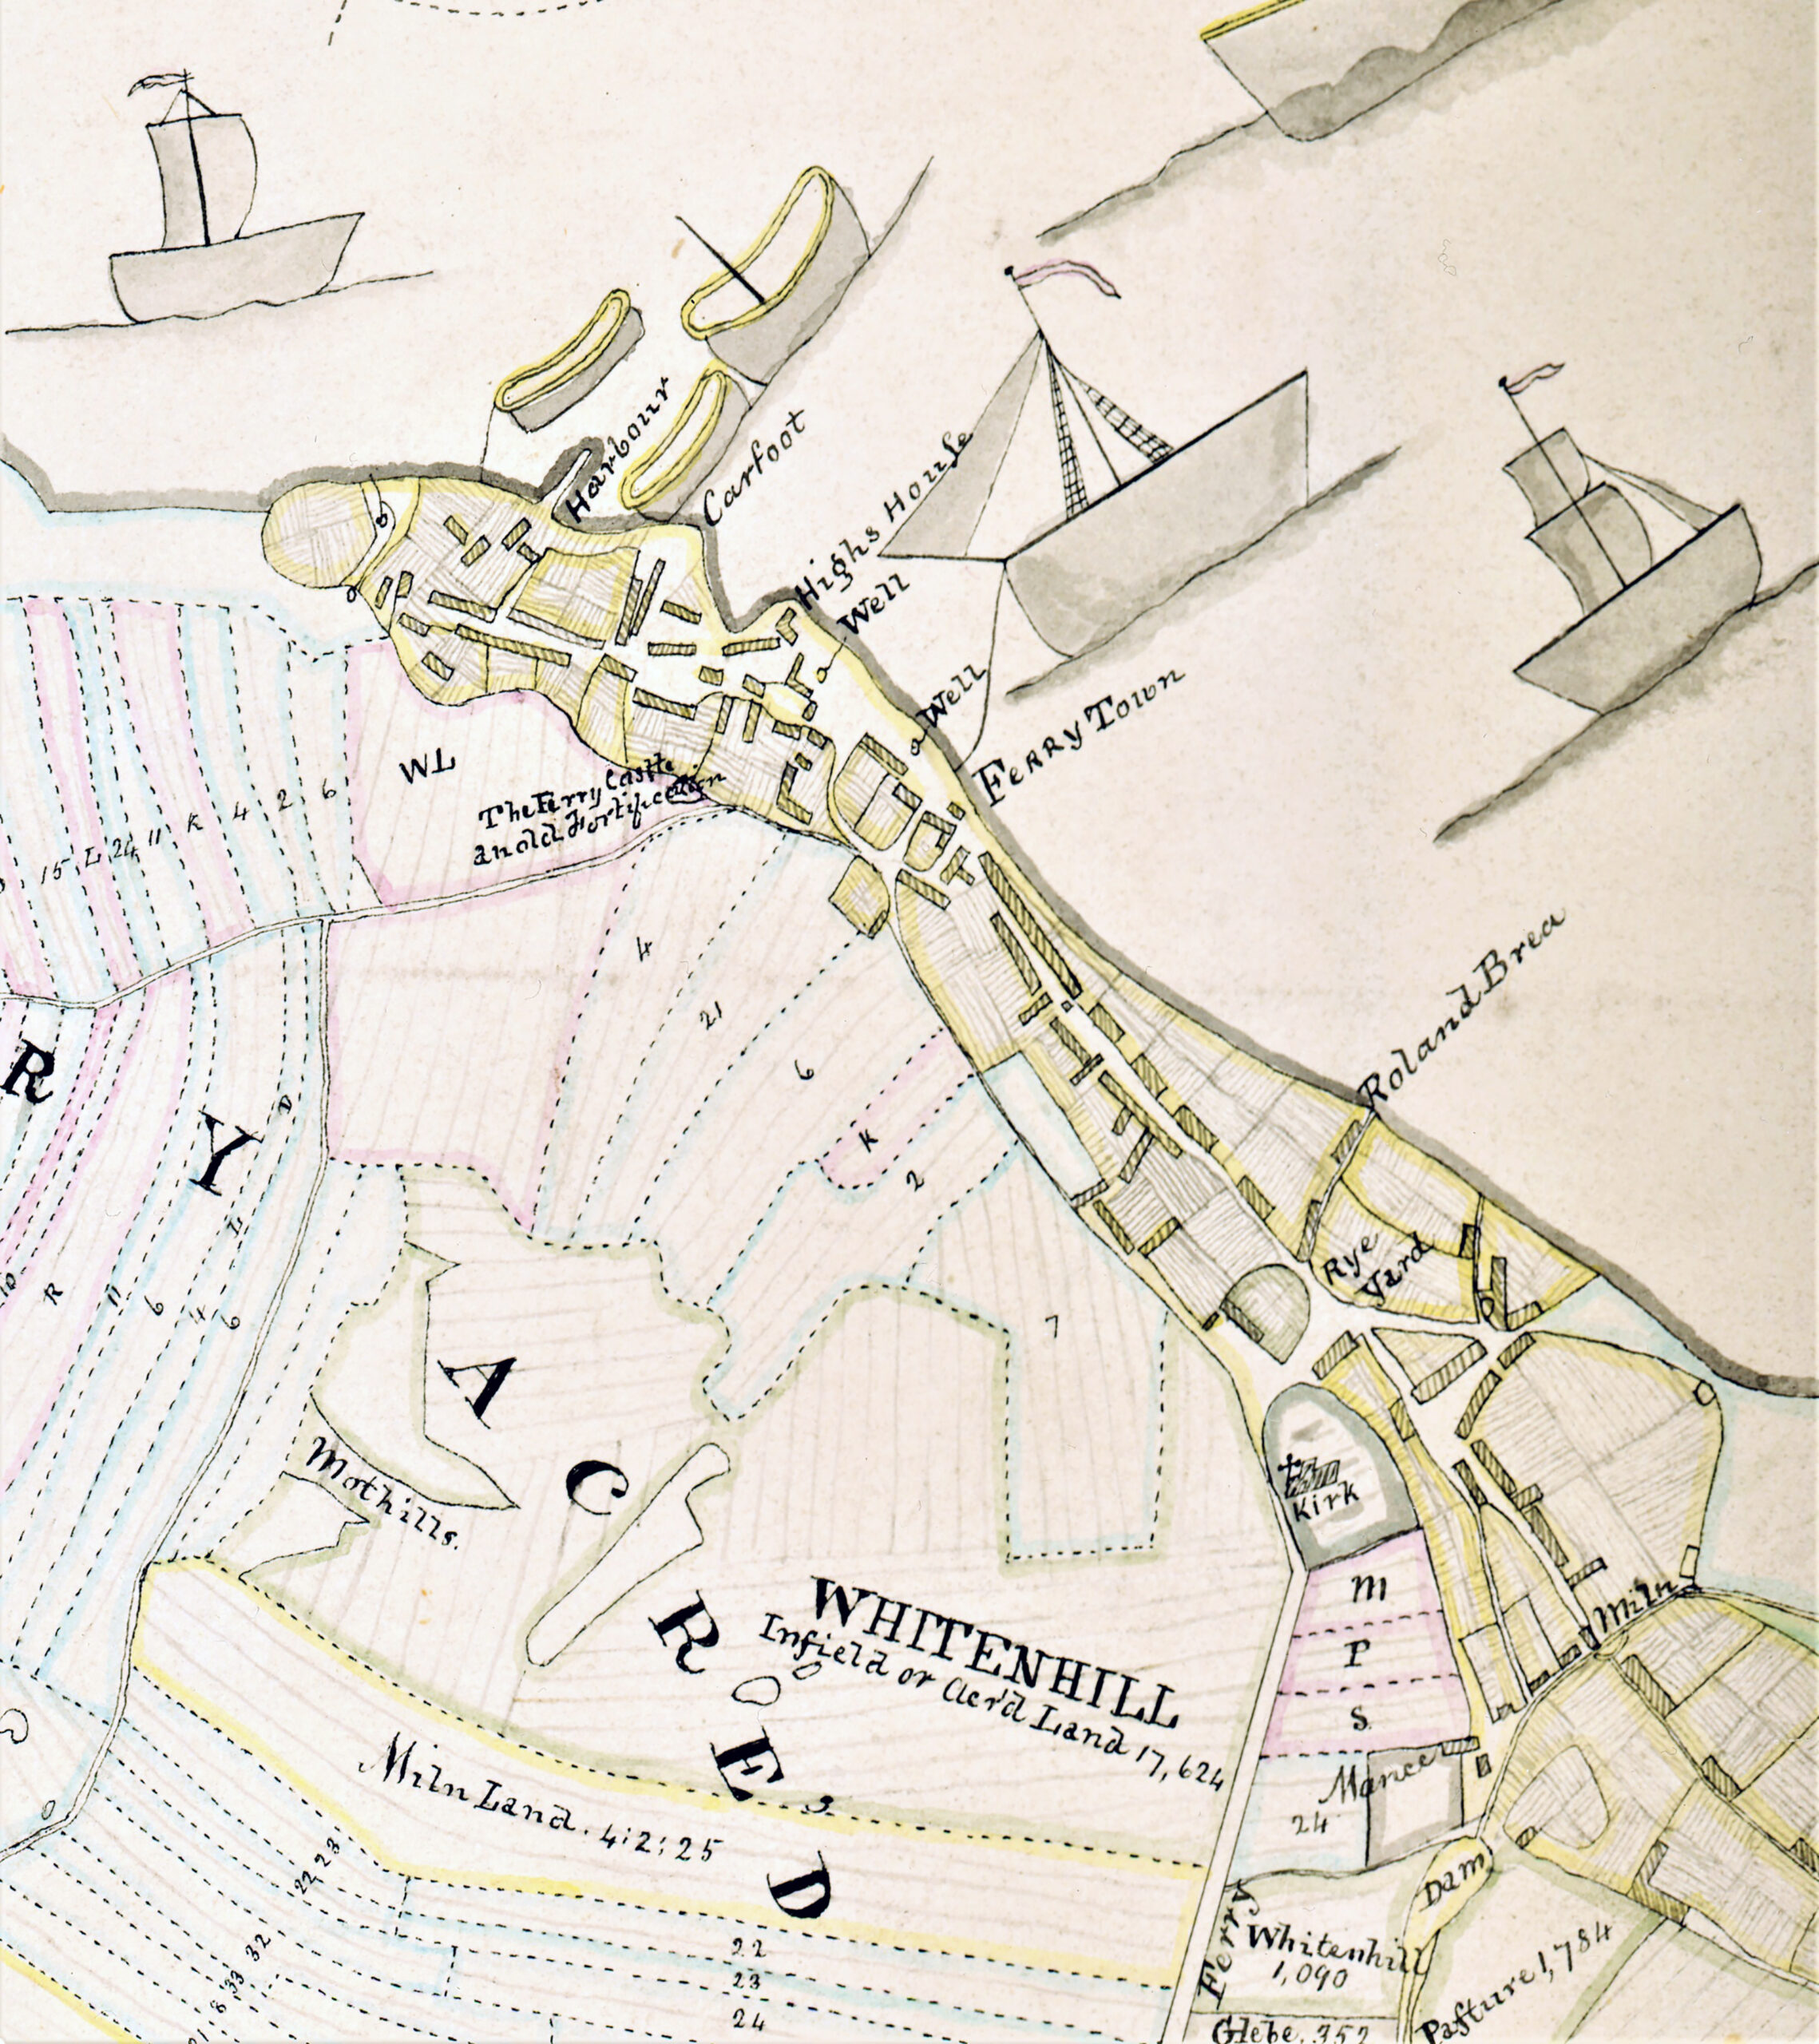 Tayport Heritage Trail - Board 1 - Extract from John Hopes 1769 map